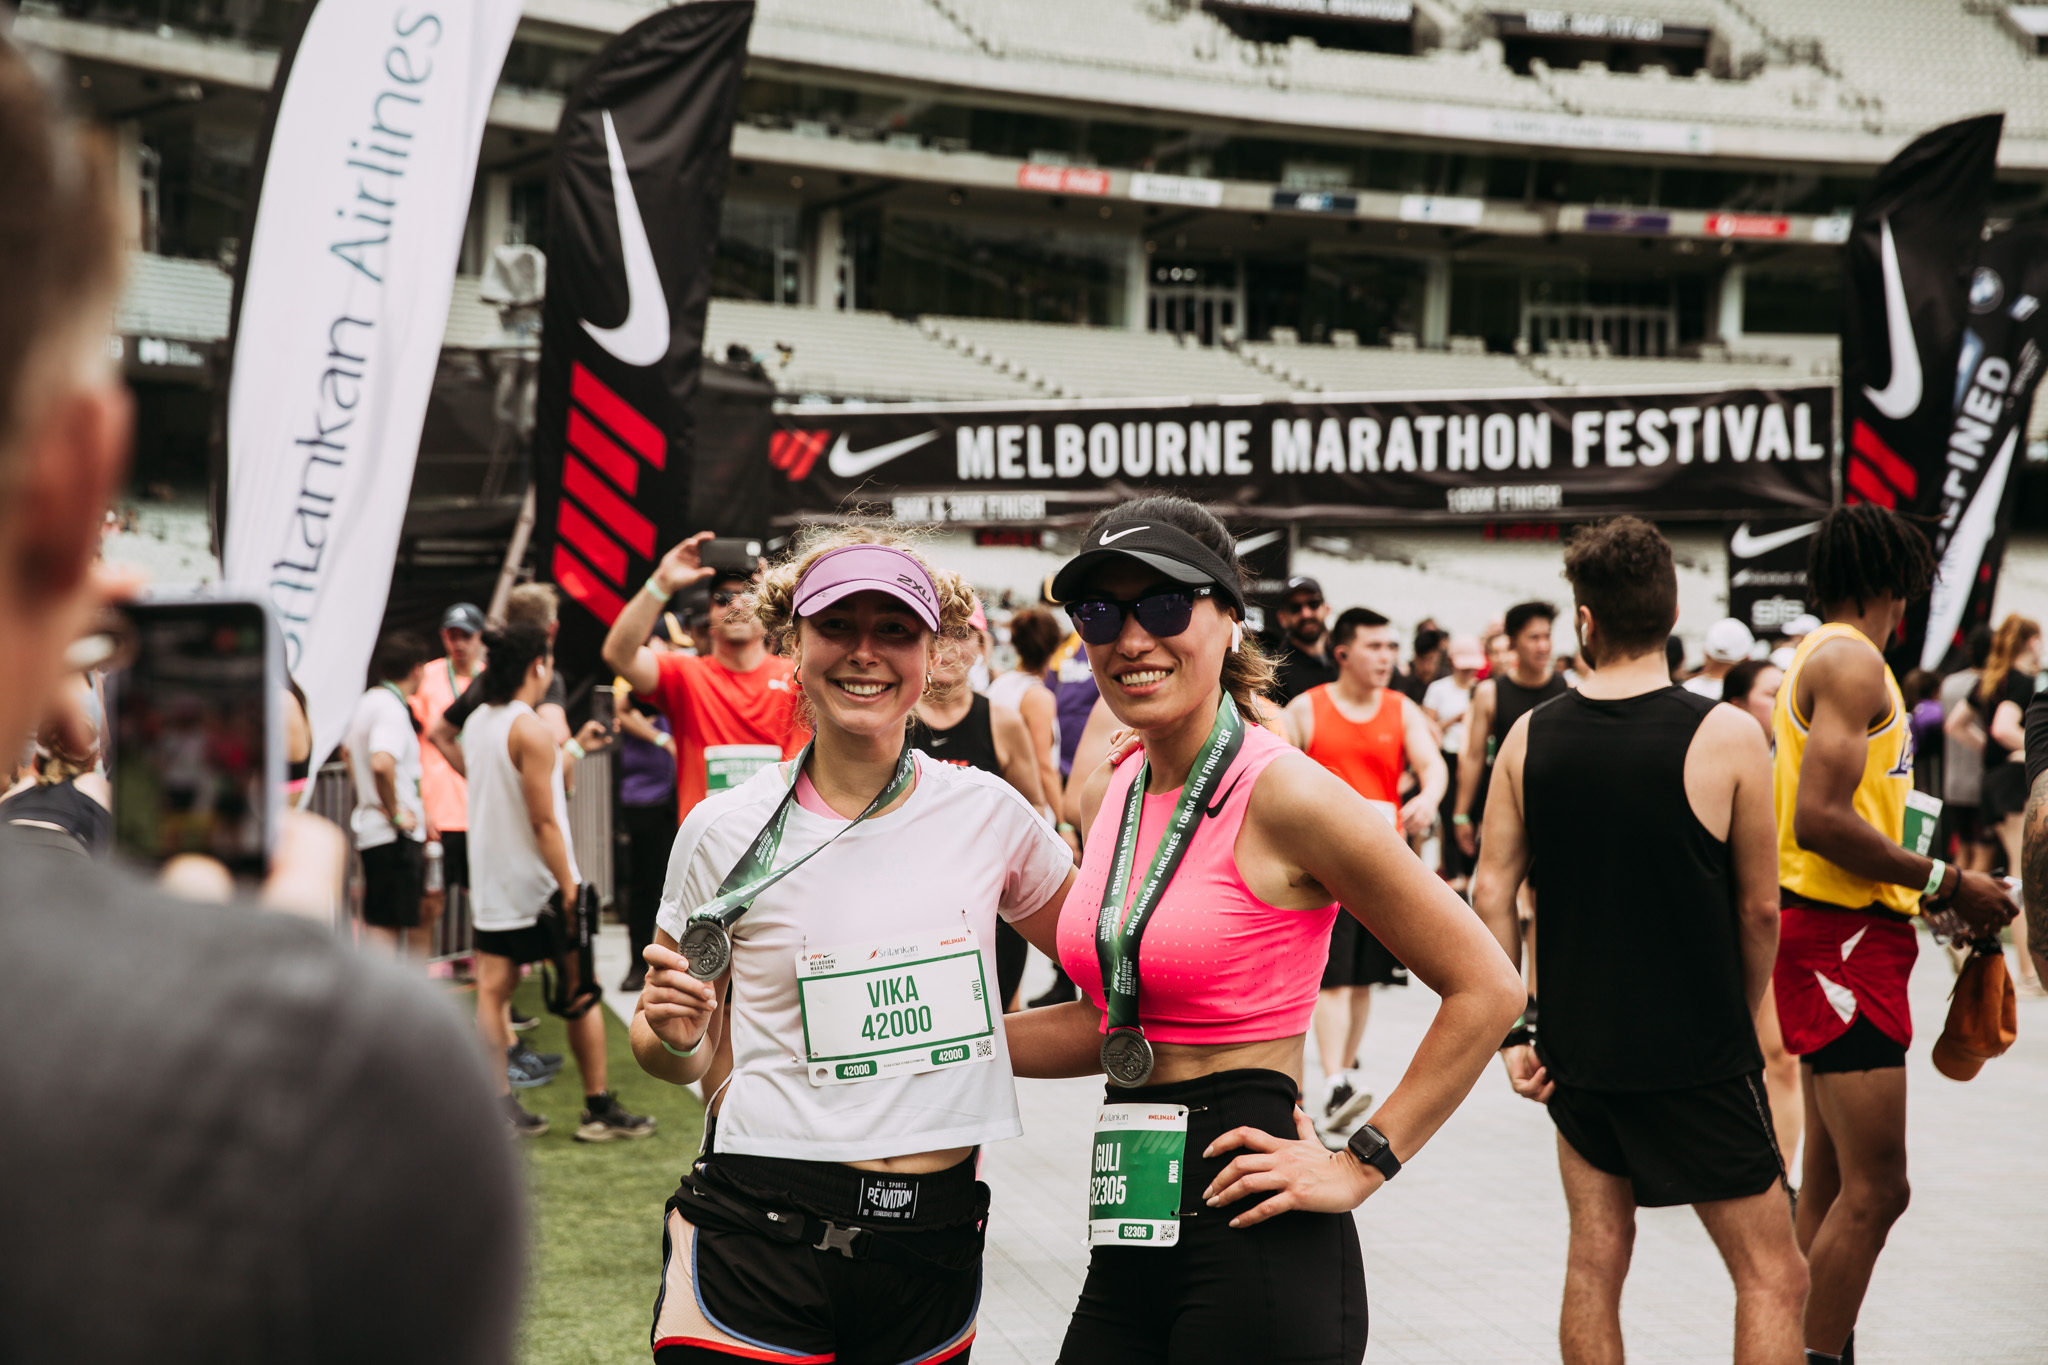 Nike Melbourne Marathon Festival returns this October